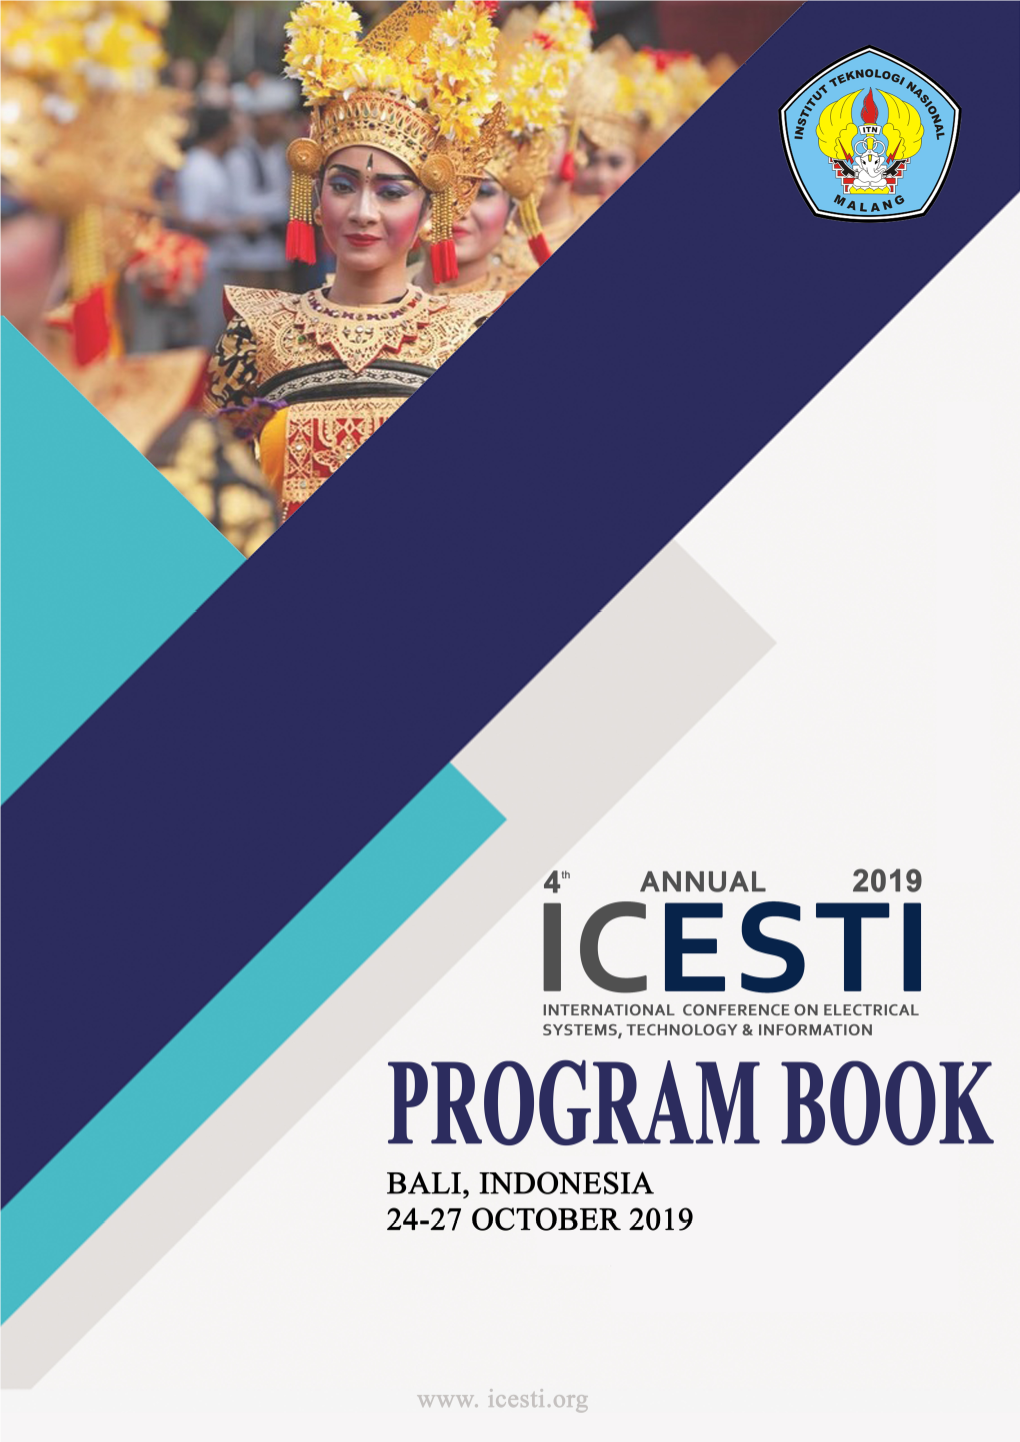 4Th ANNUAL ICESTI 2019 PROGRAM BOOK